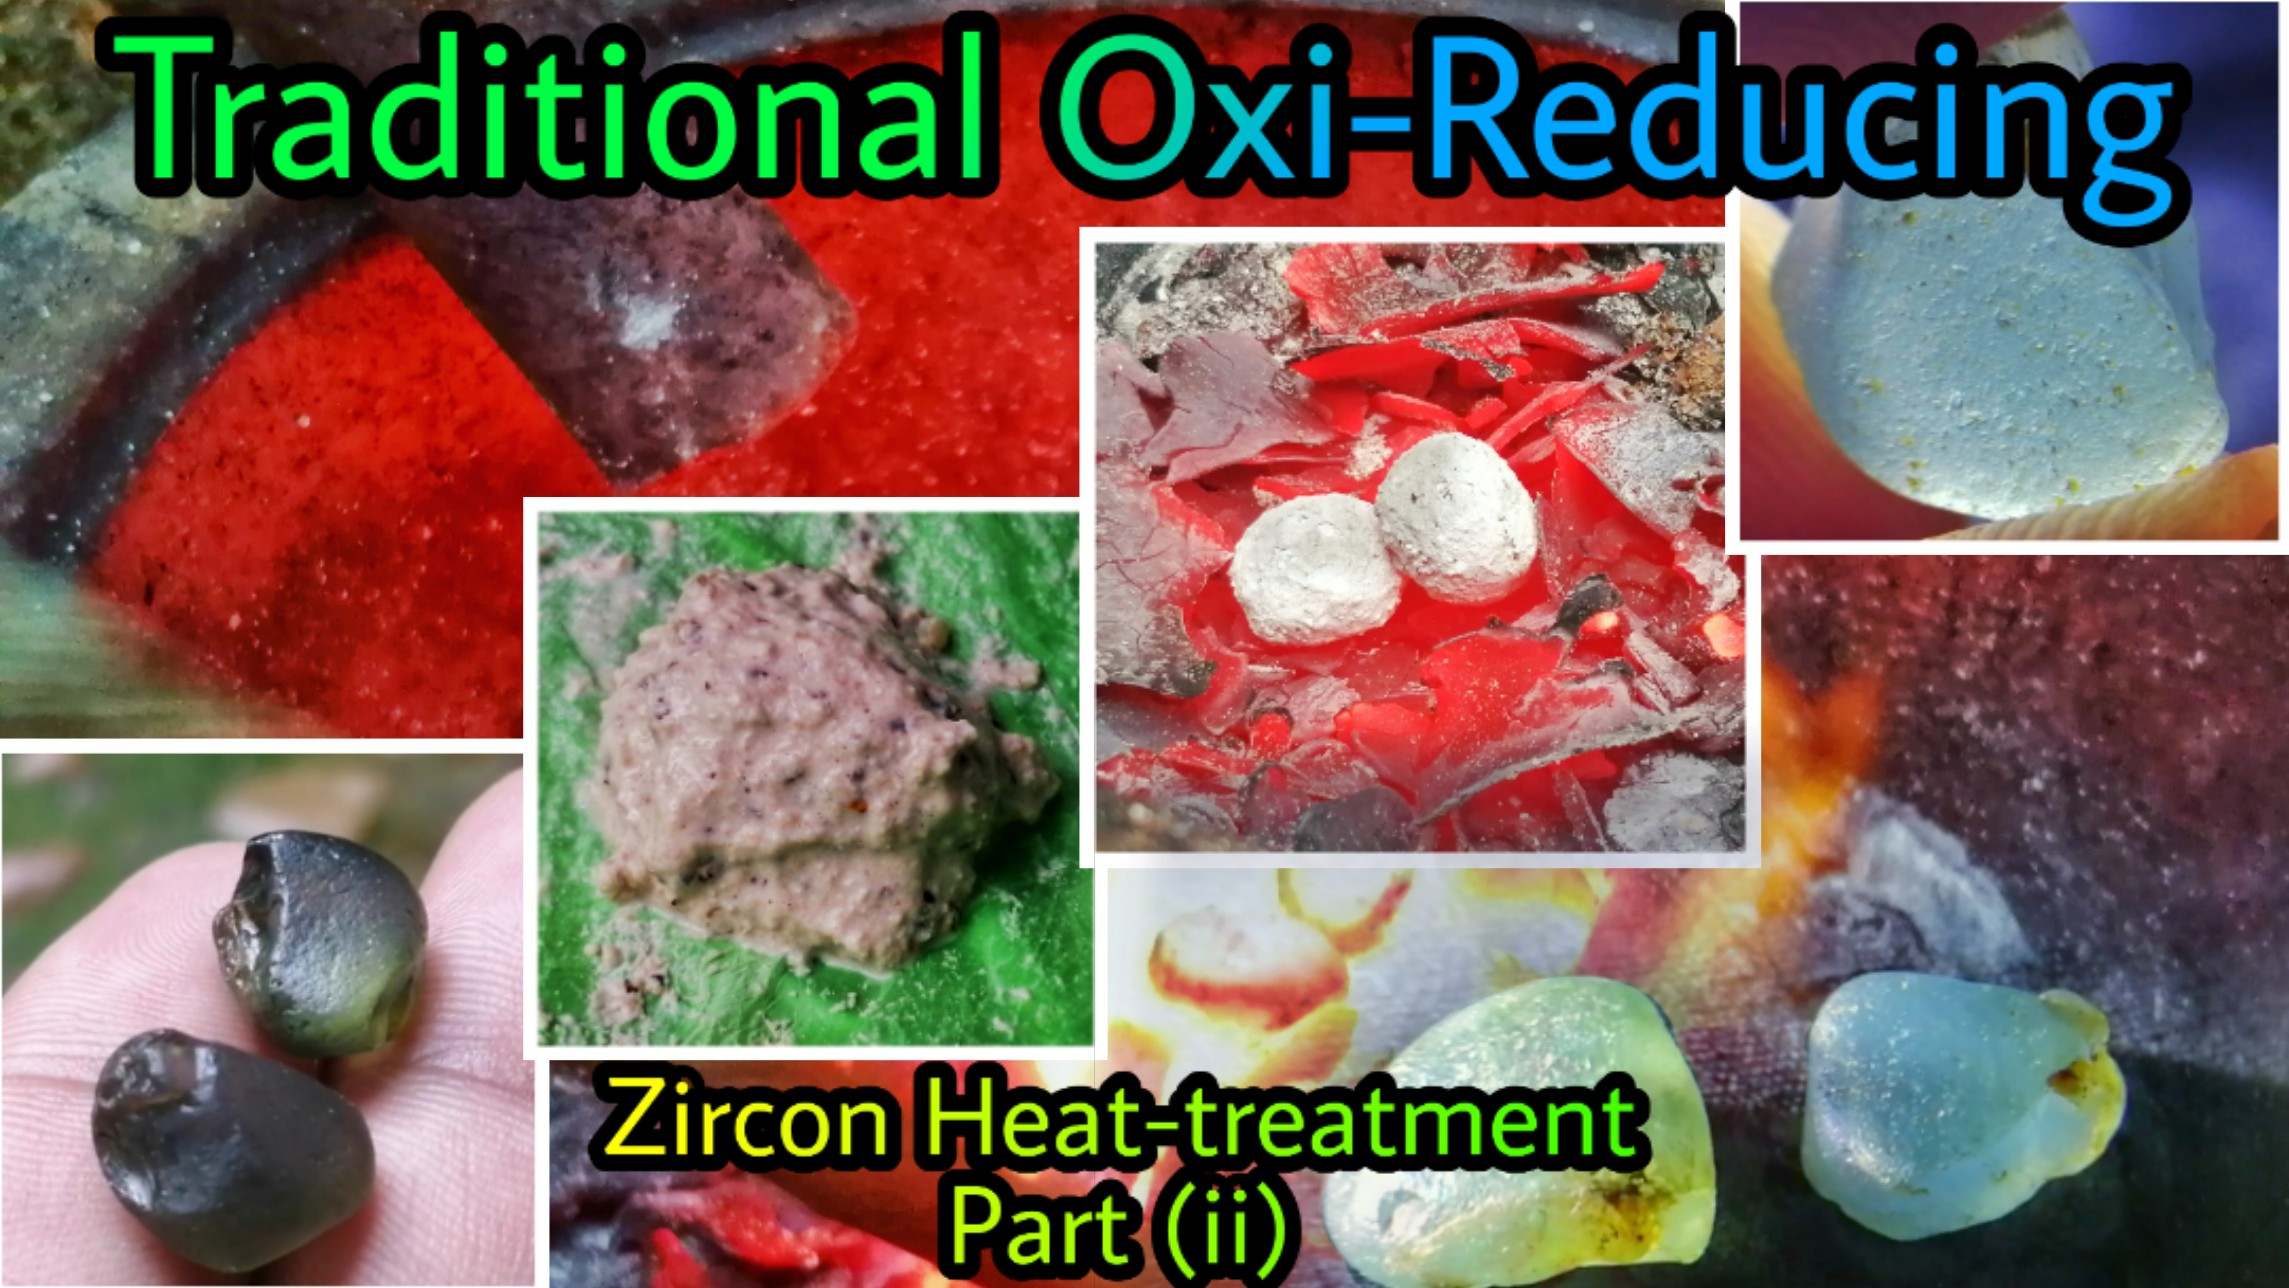 Traditional Oxireducing Method - Zircon Heat-treatment Part (ii)